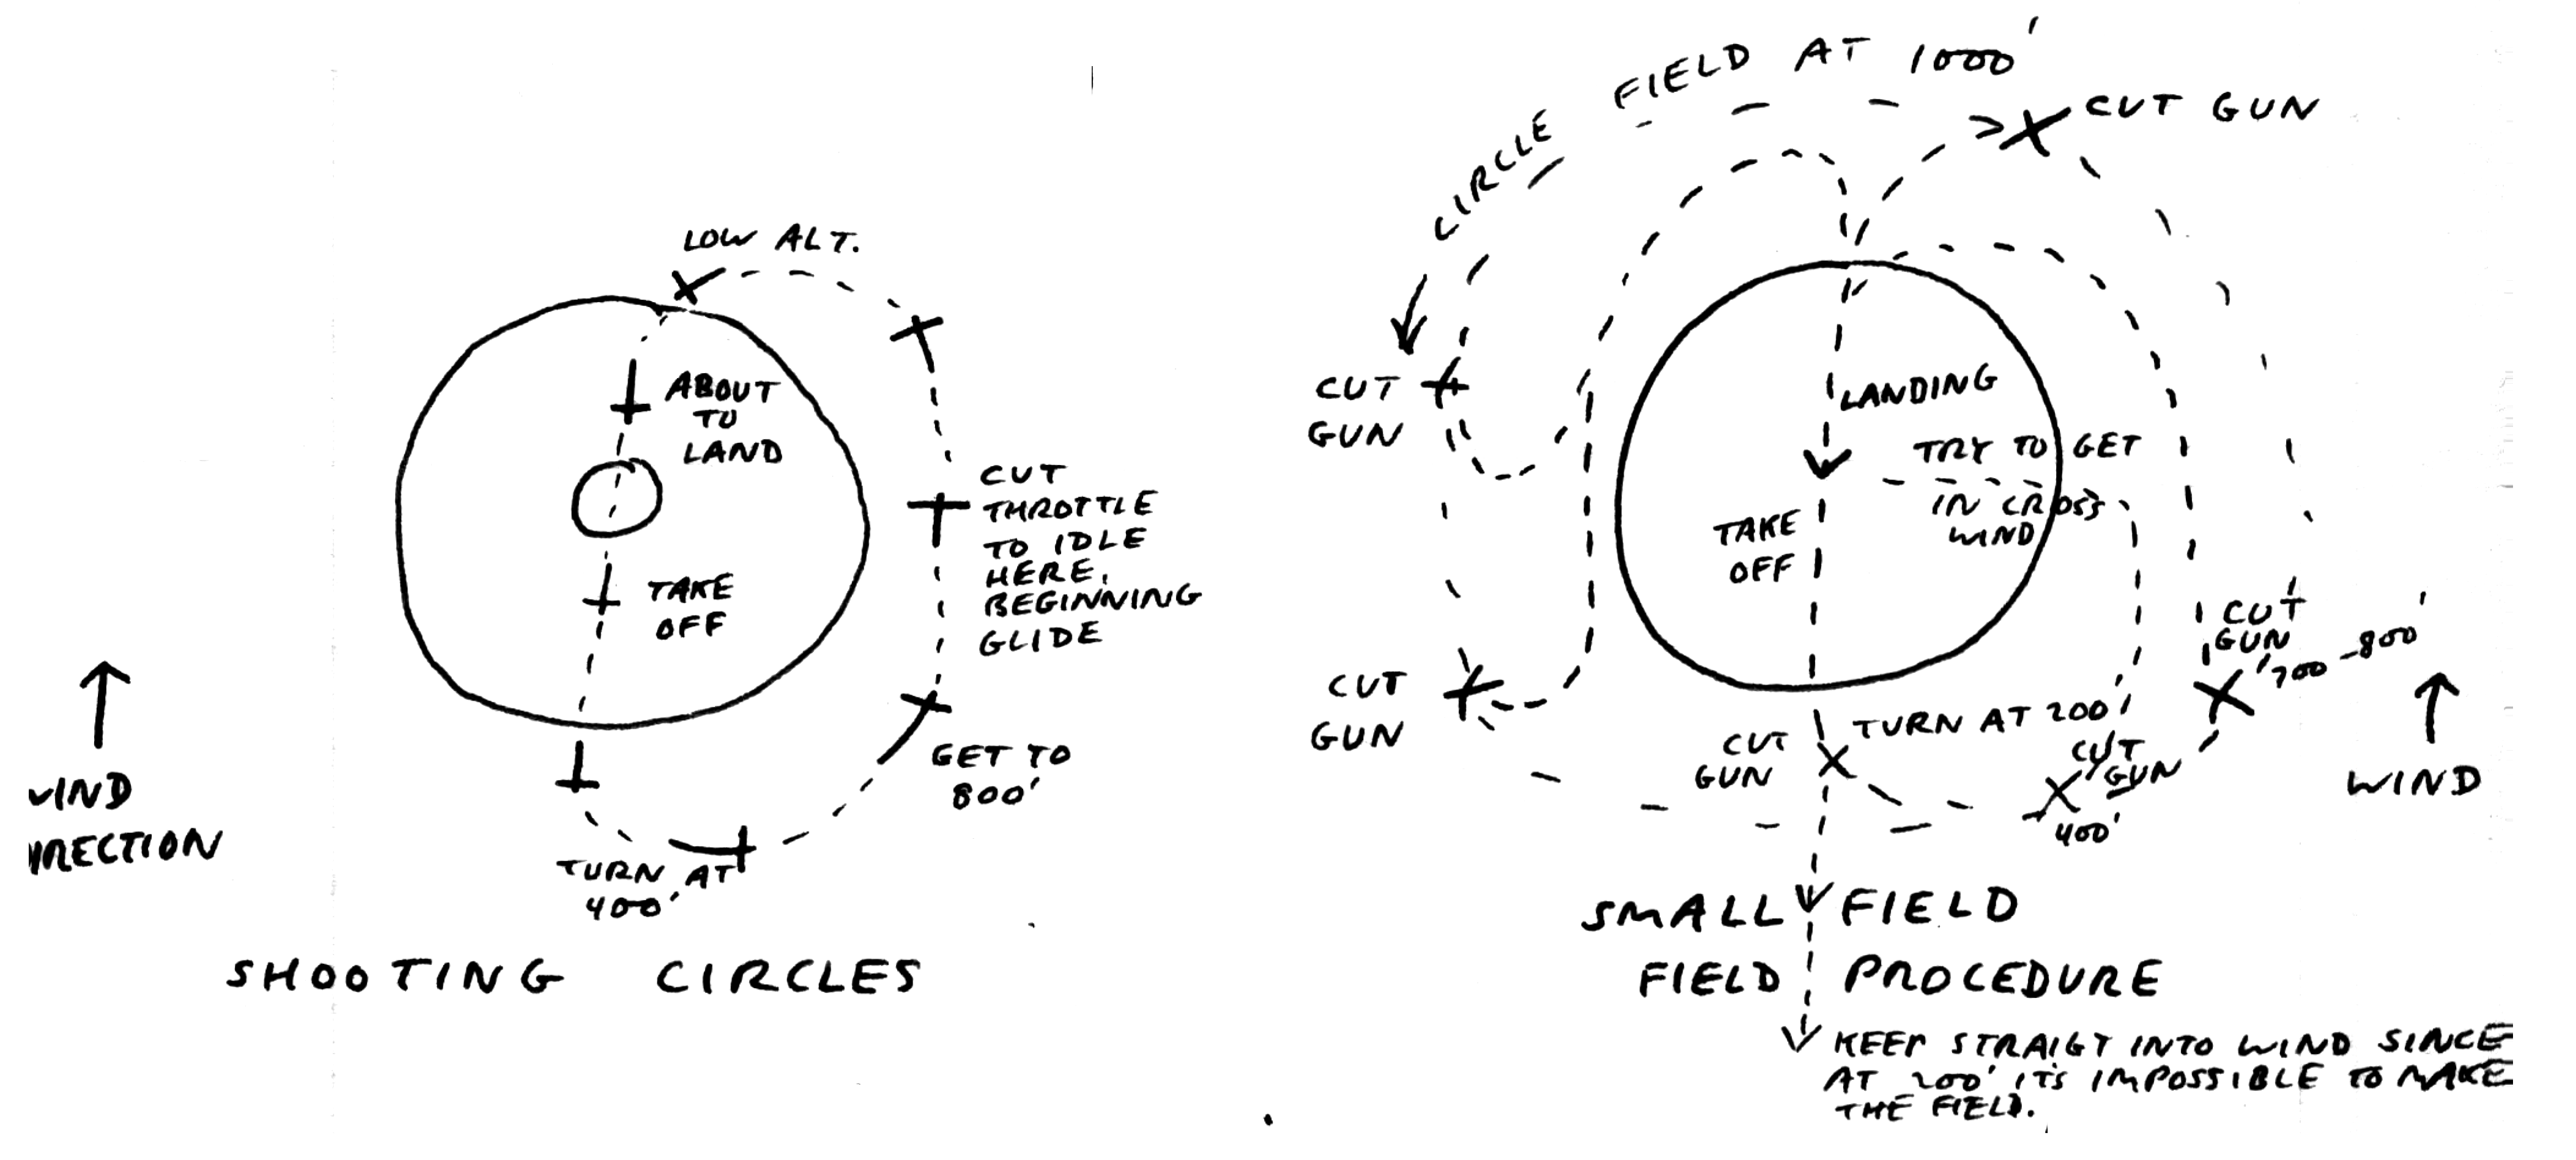 diagrams of small-field precision-landing procedures